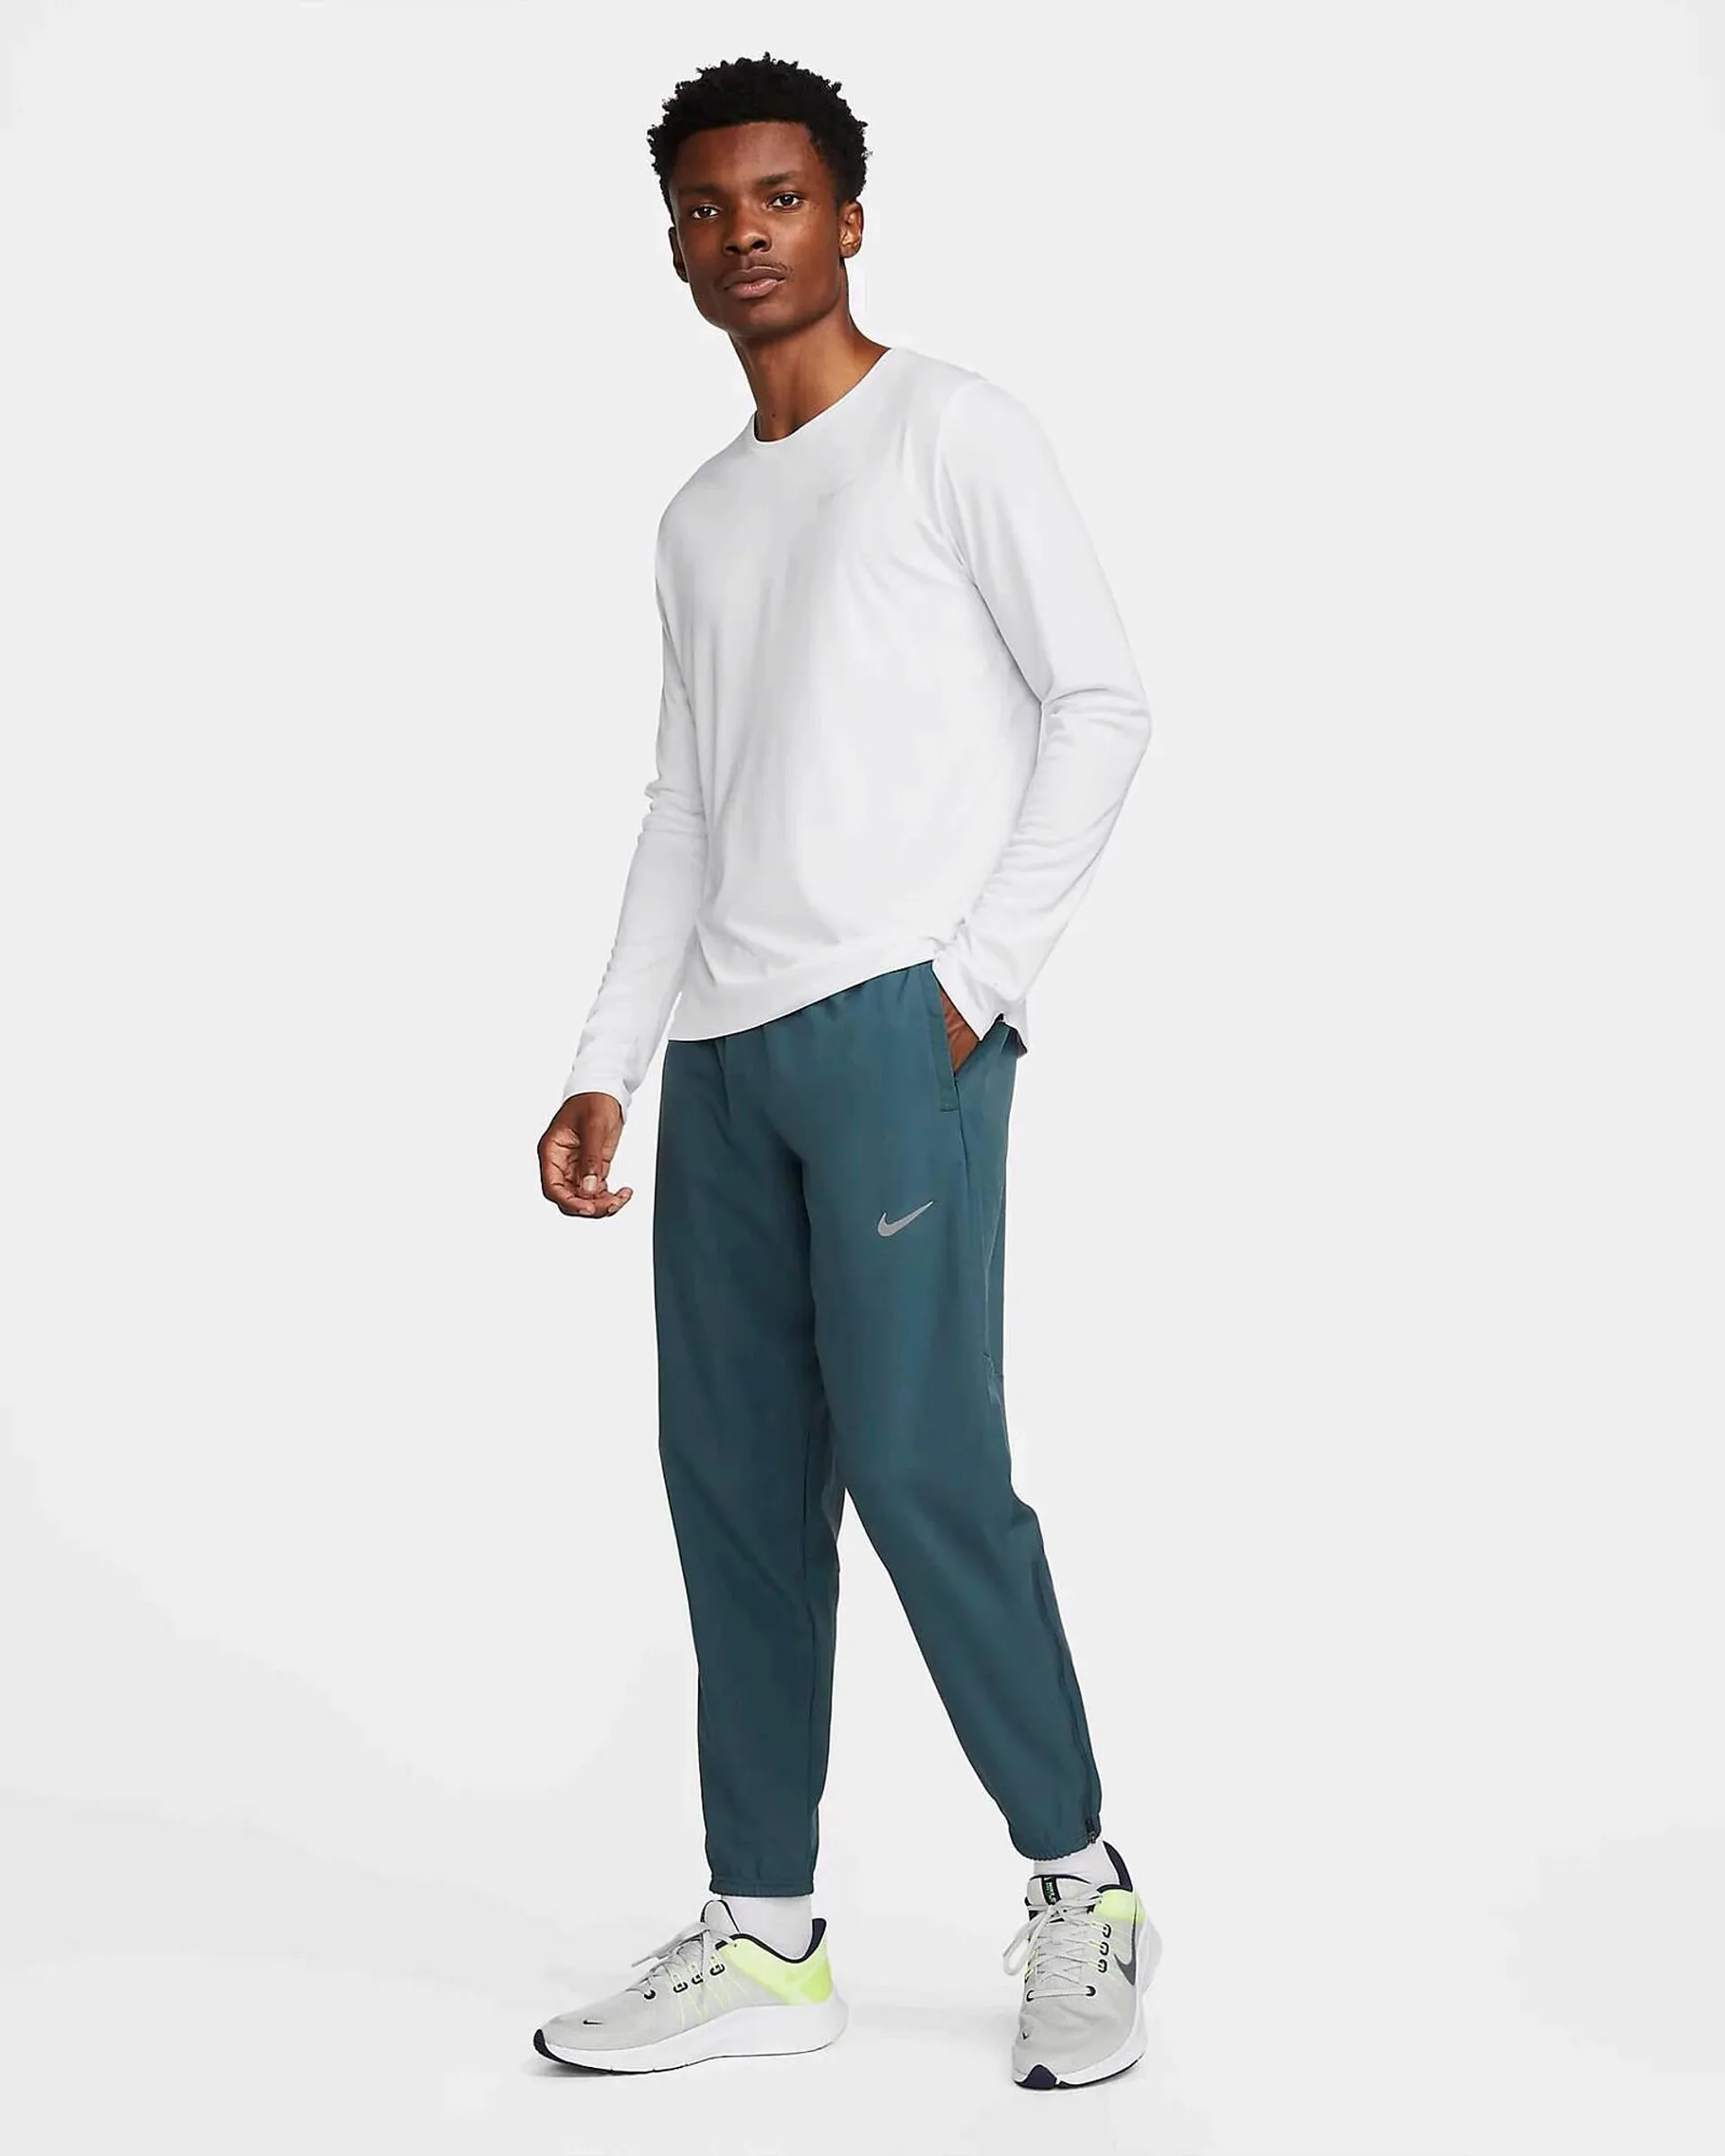 Nike folder - 11